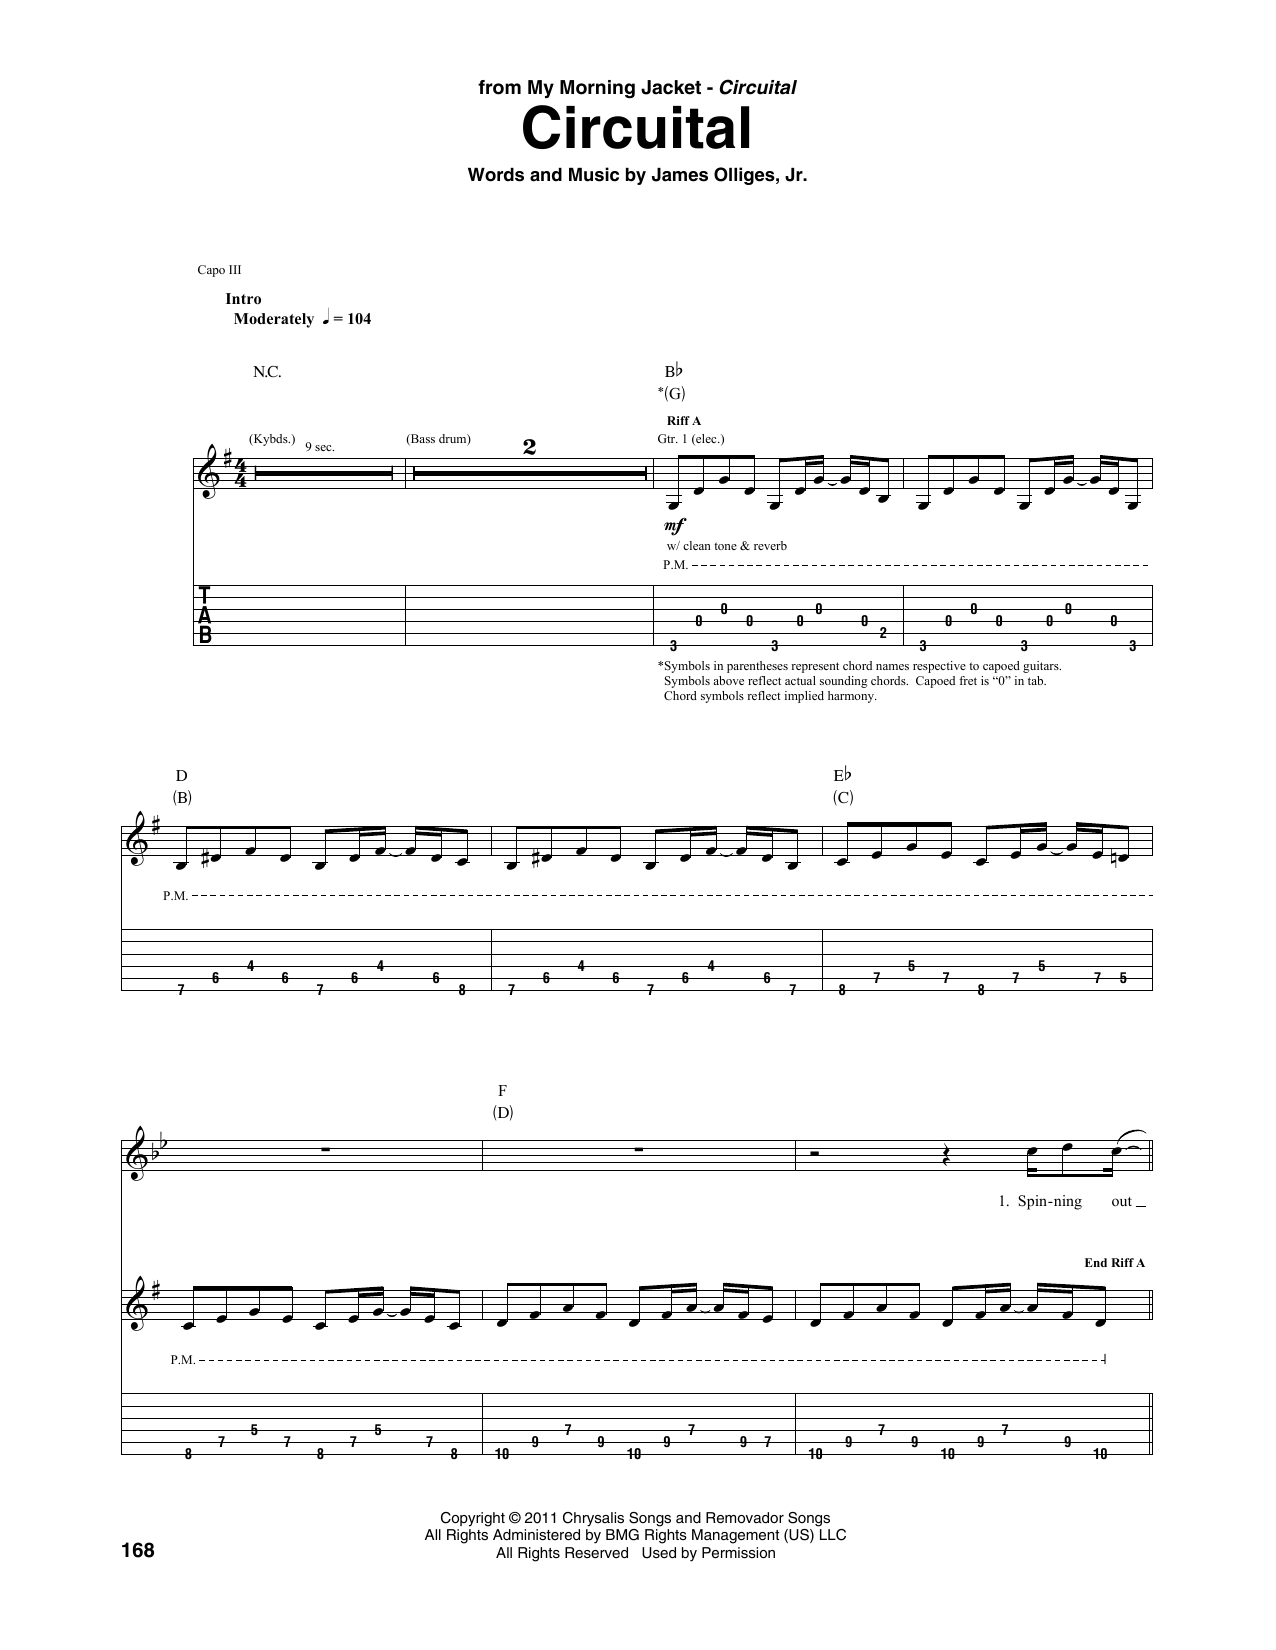 My Morning Jacket Circuital Sheet Music Notes & Chords for Guitar Tab - Download or Print PDF